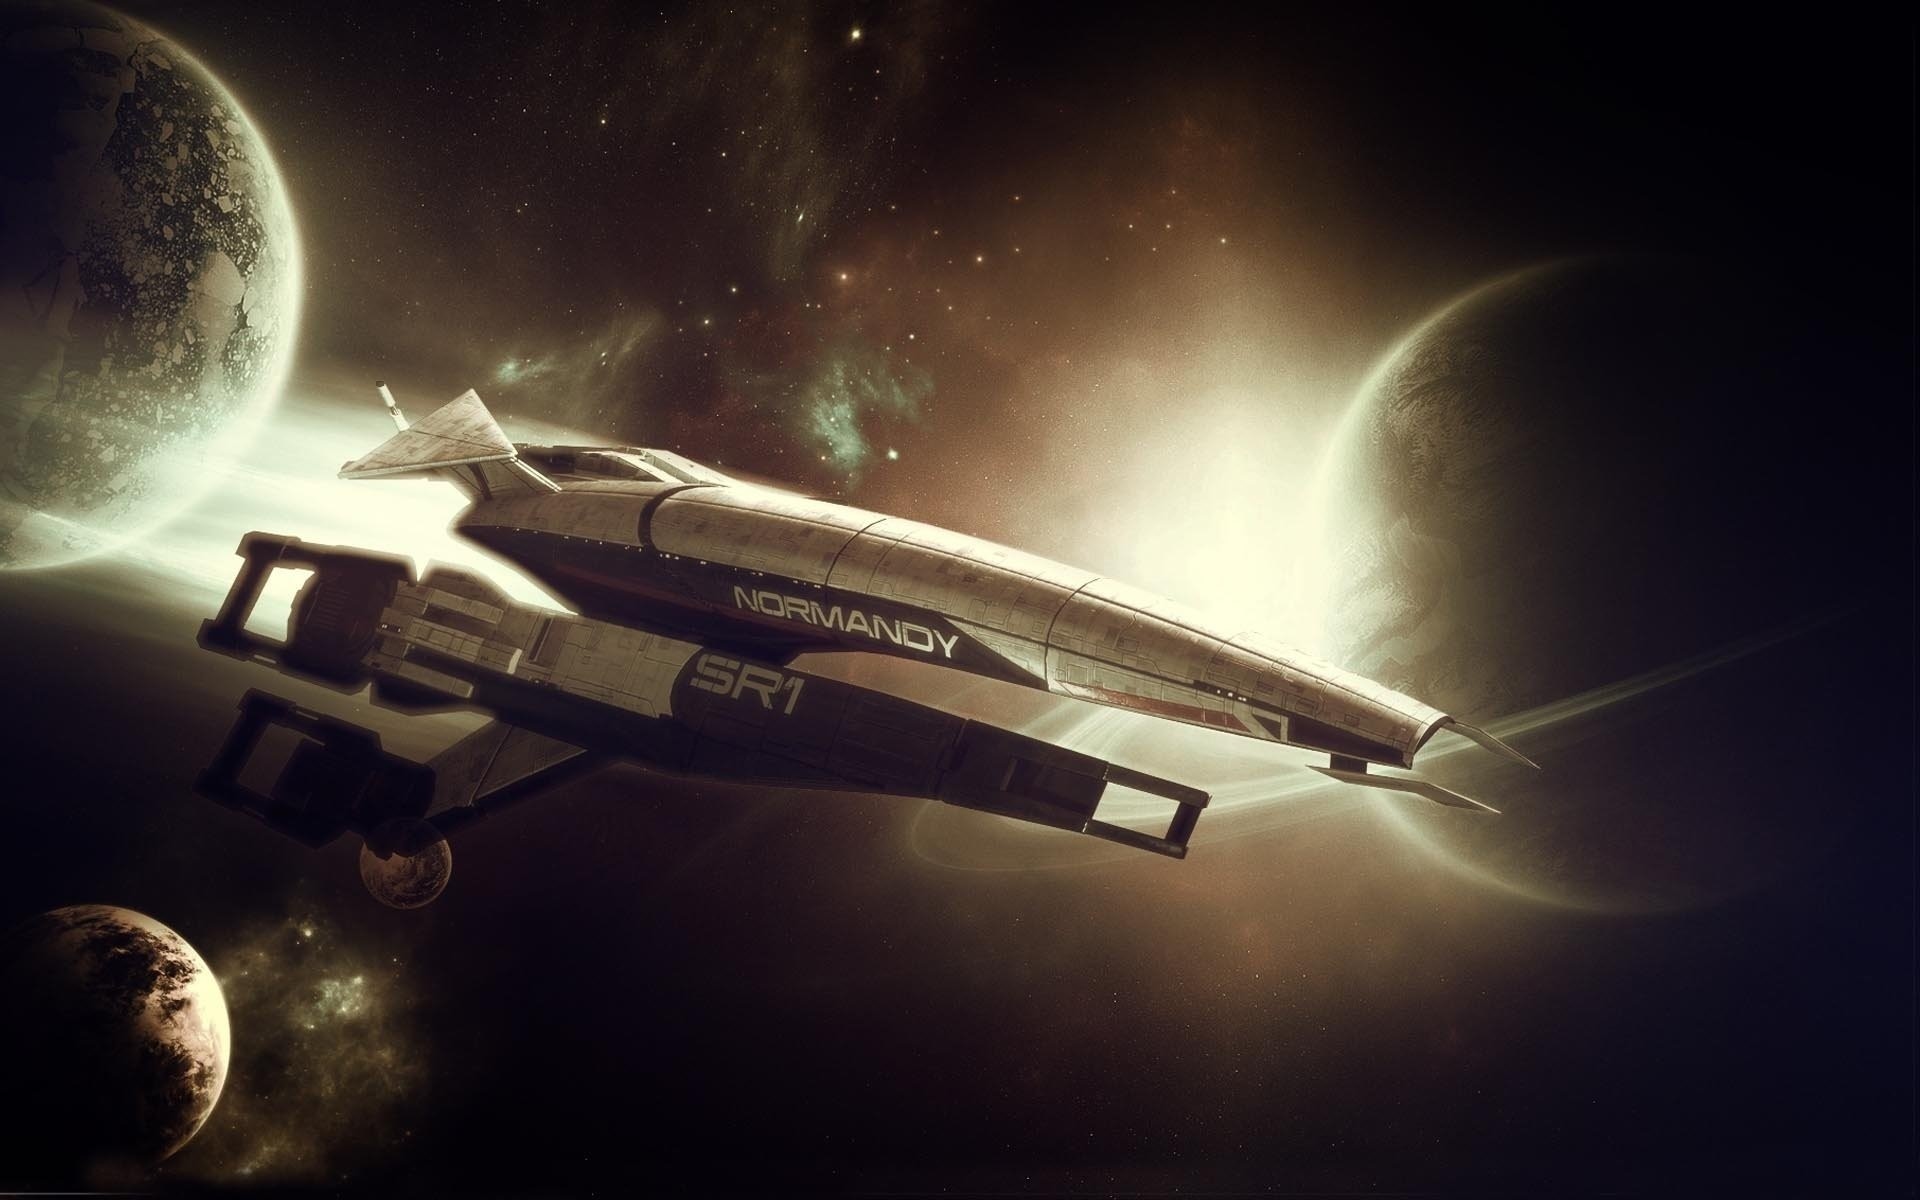 Mass Effect Desktop Background Image